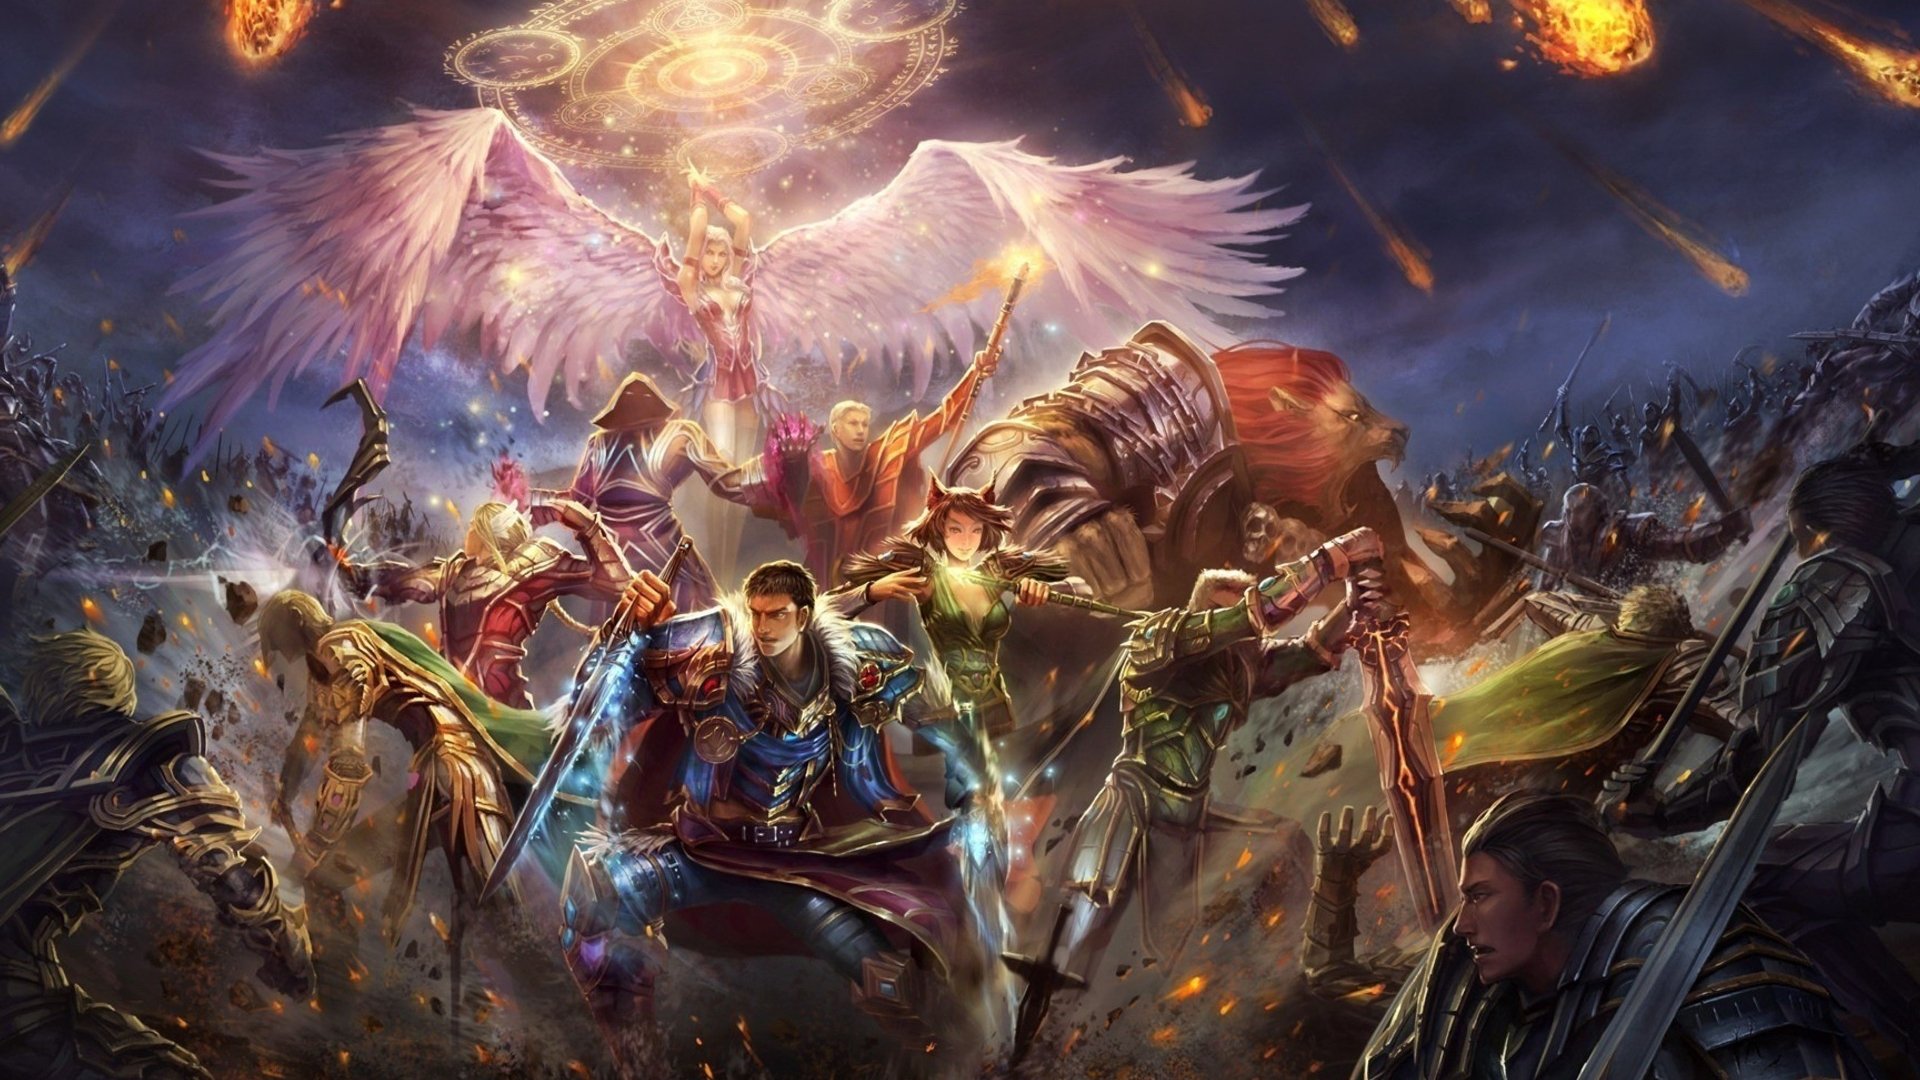 Epic Battle Fantasy HD Wallpaper Background Image